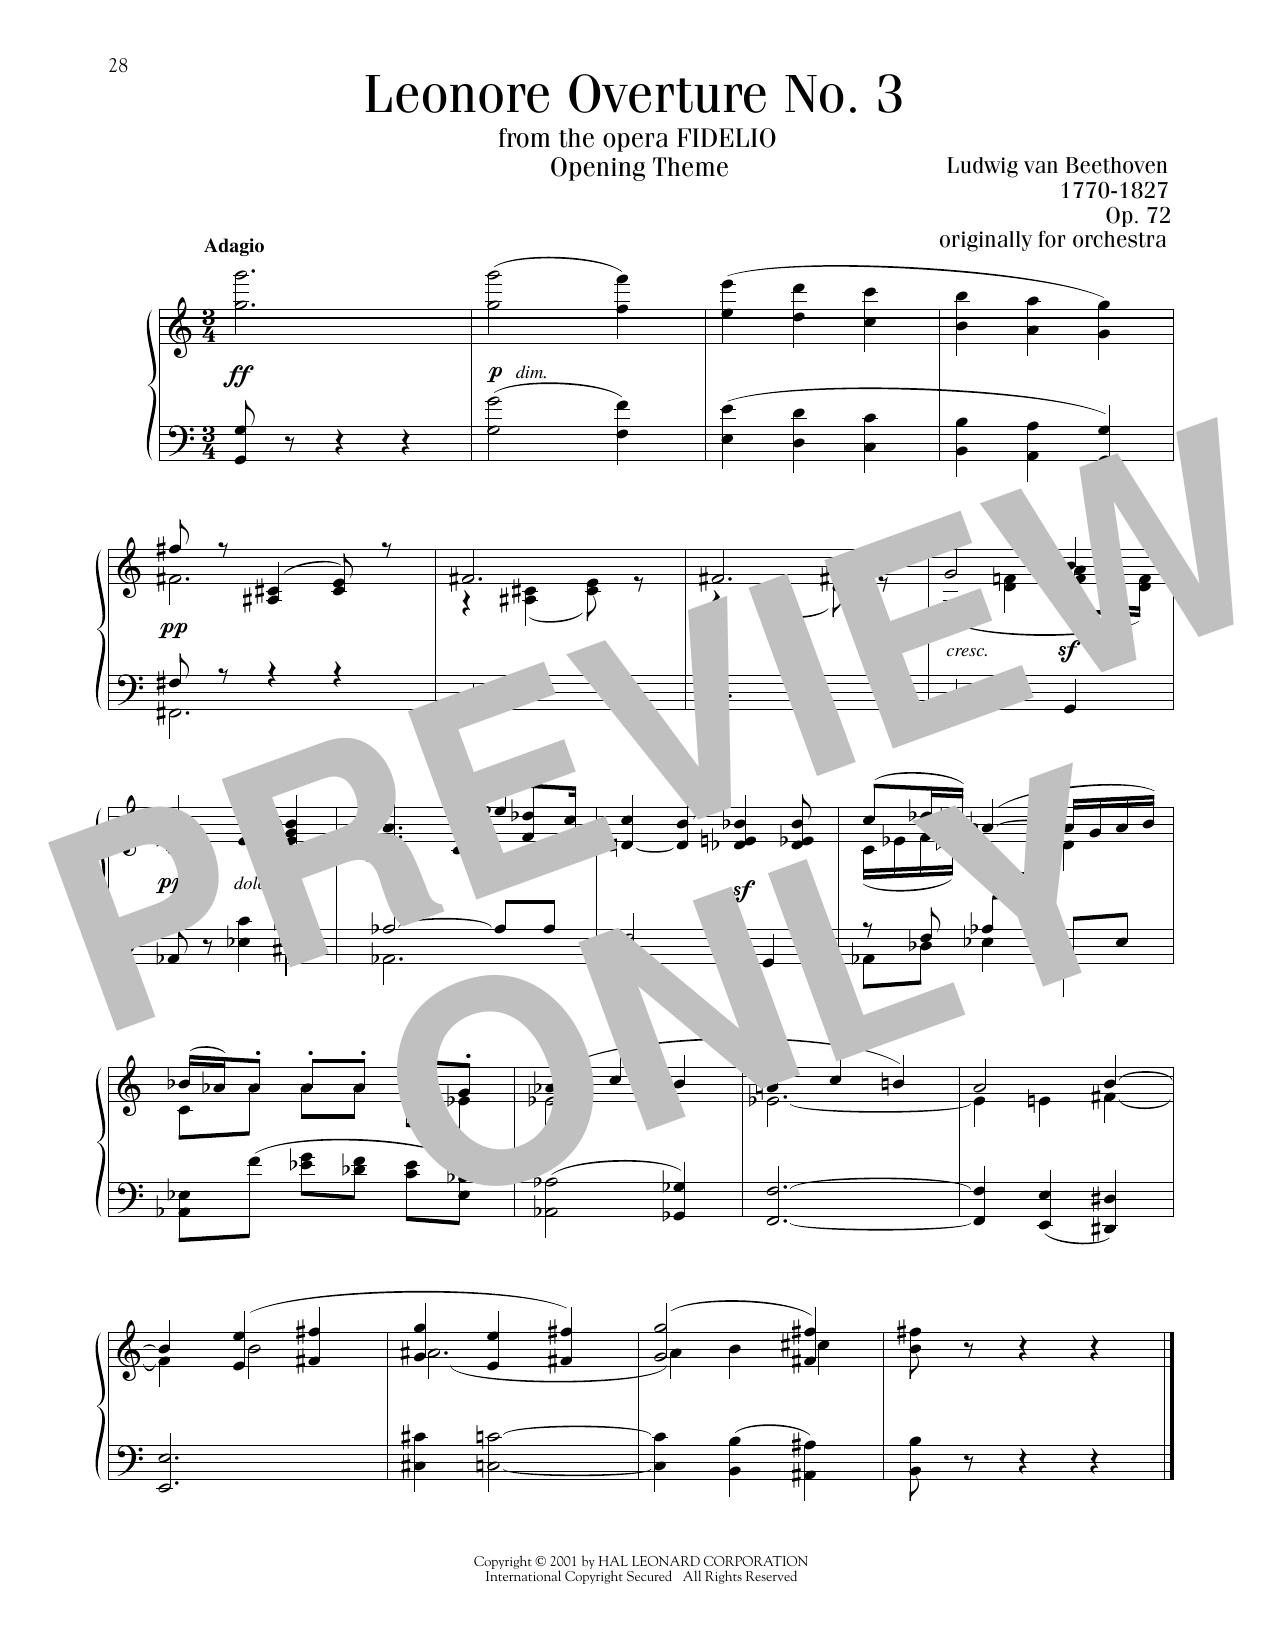 Ludwig van Beethoven Leonore Overture No. 3 sheet music notes printable PDF score